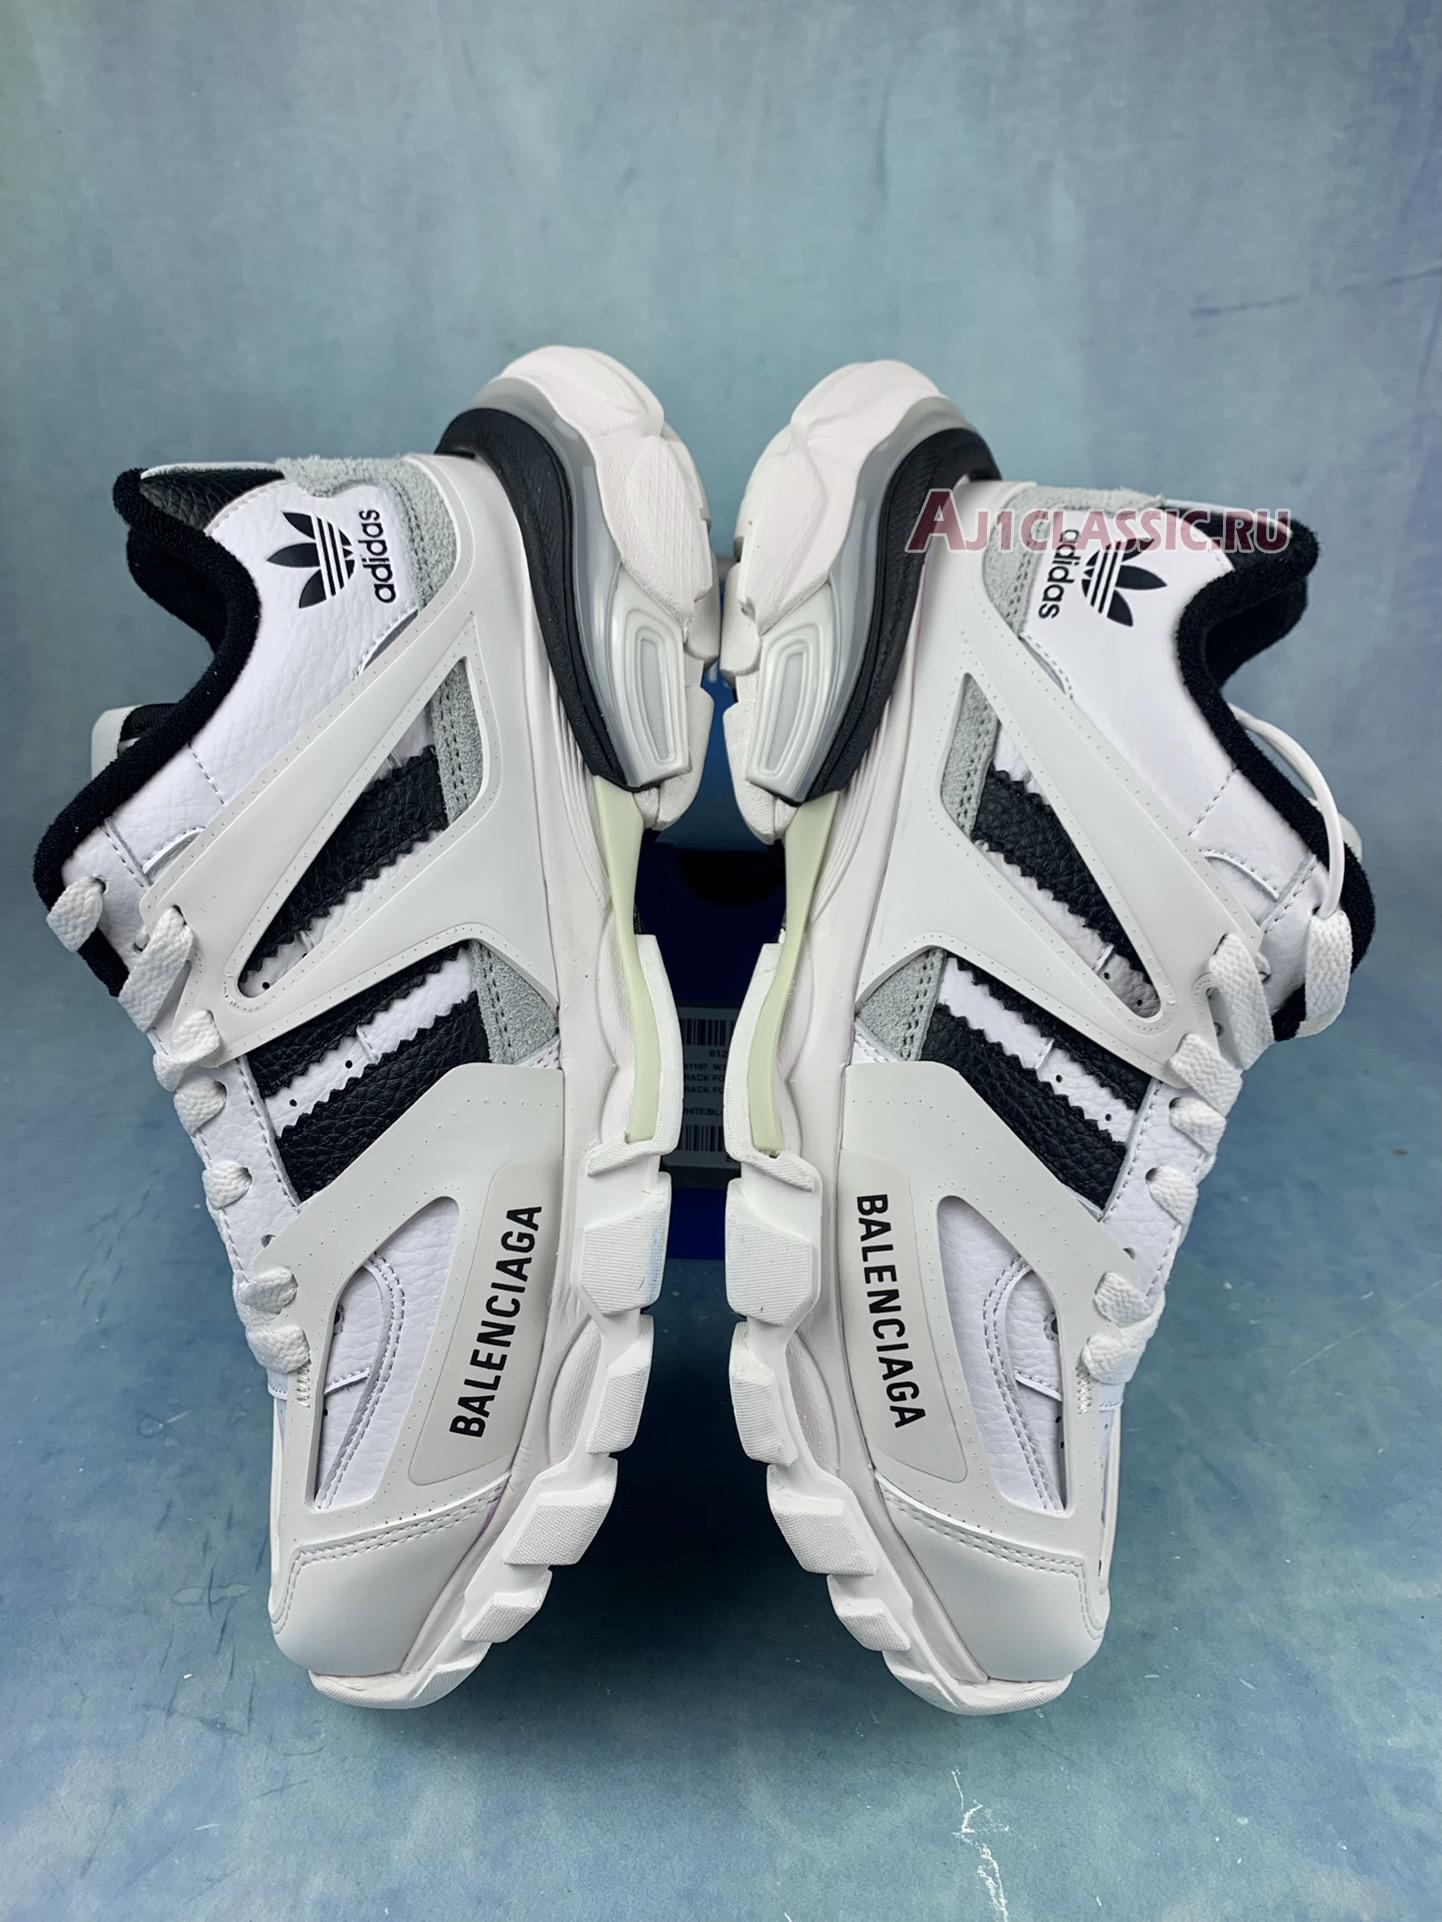 Balenciaga Adidas Track Forum Low Top Sneakers "White Black" 741107 W3CZ1 9010